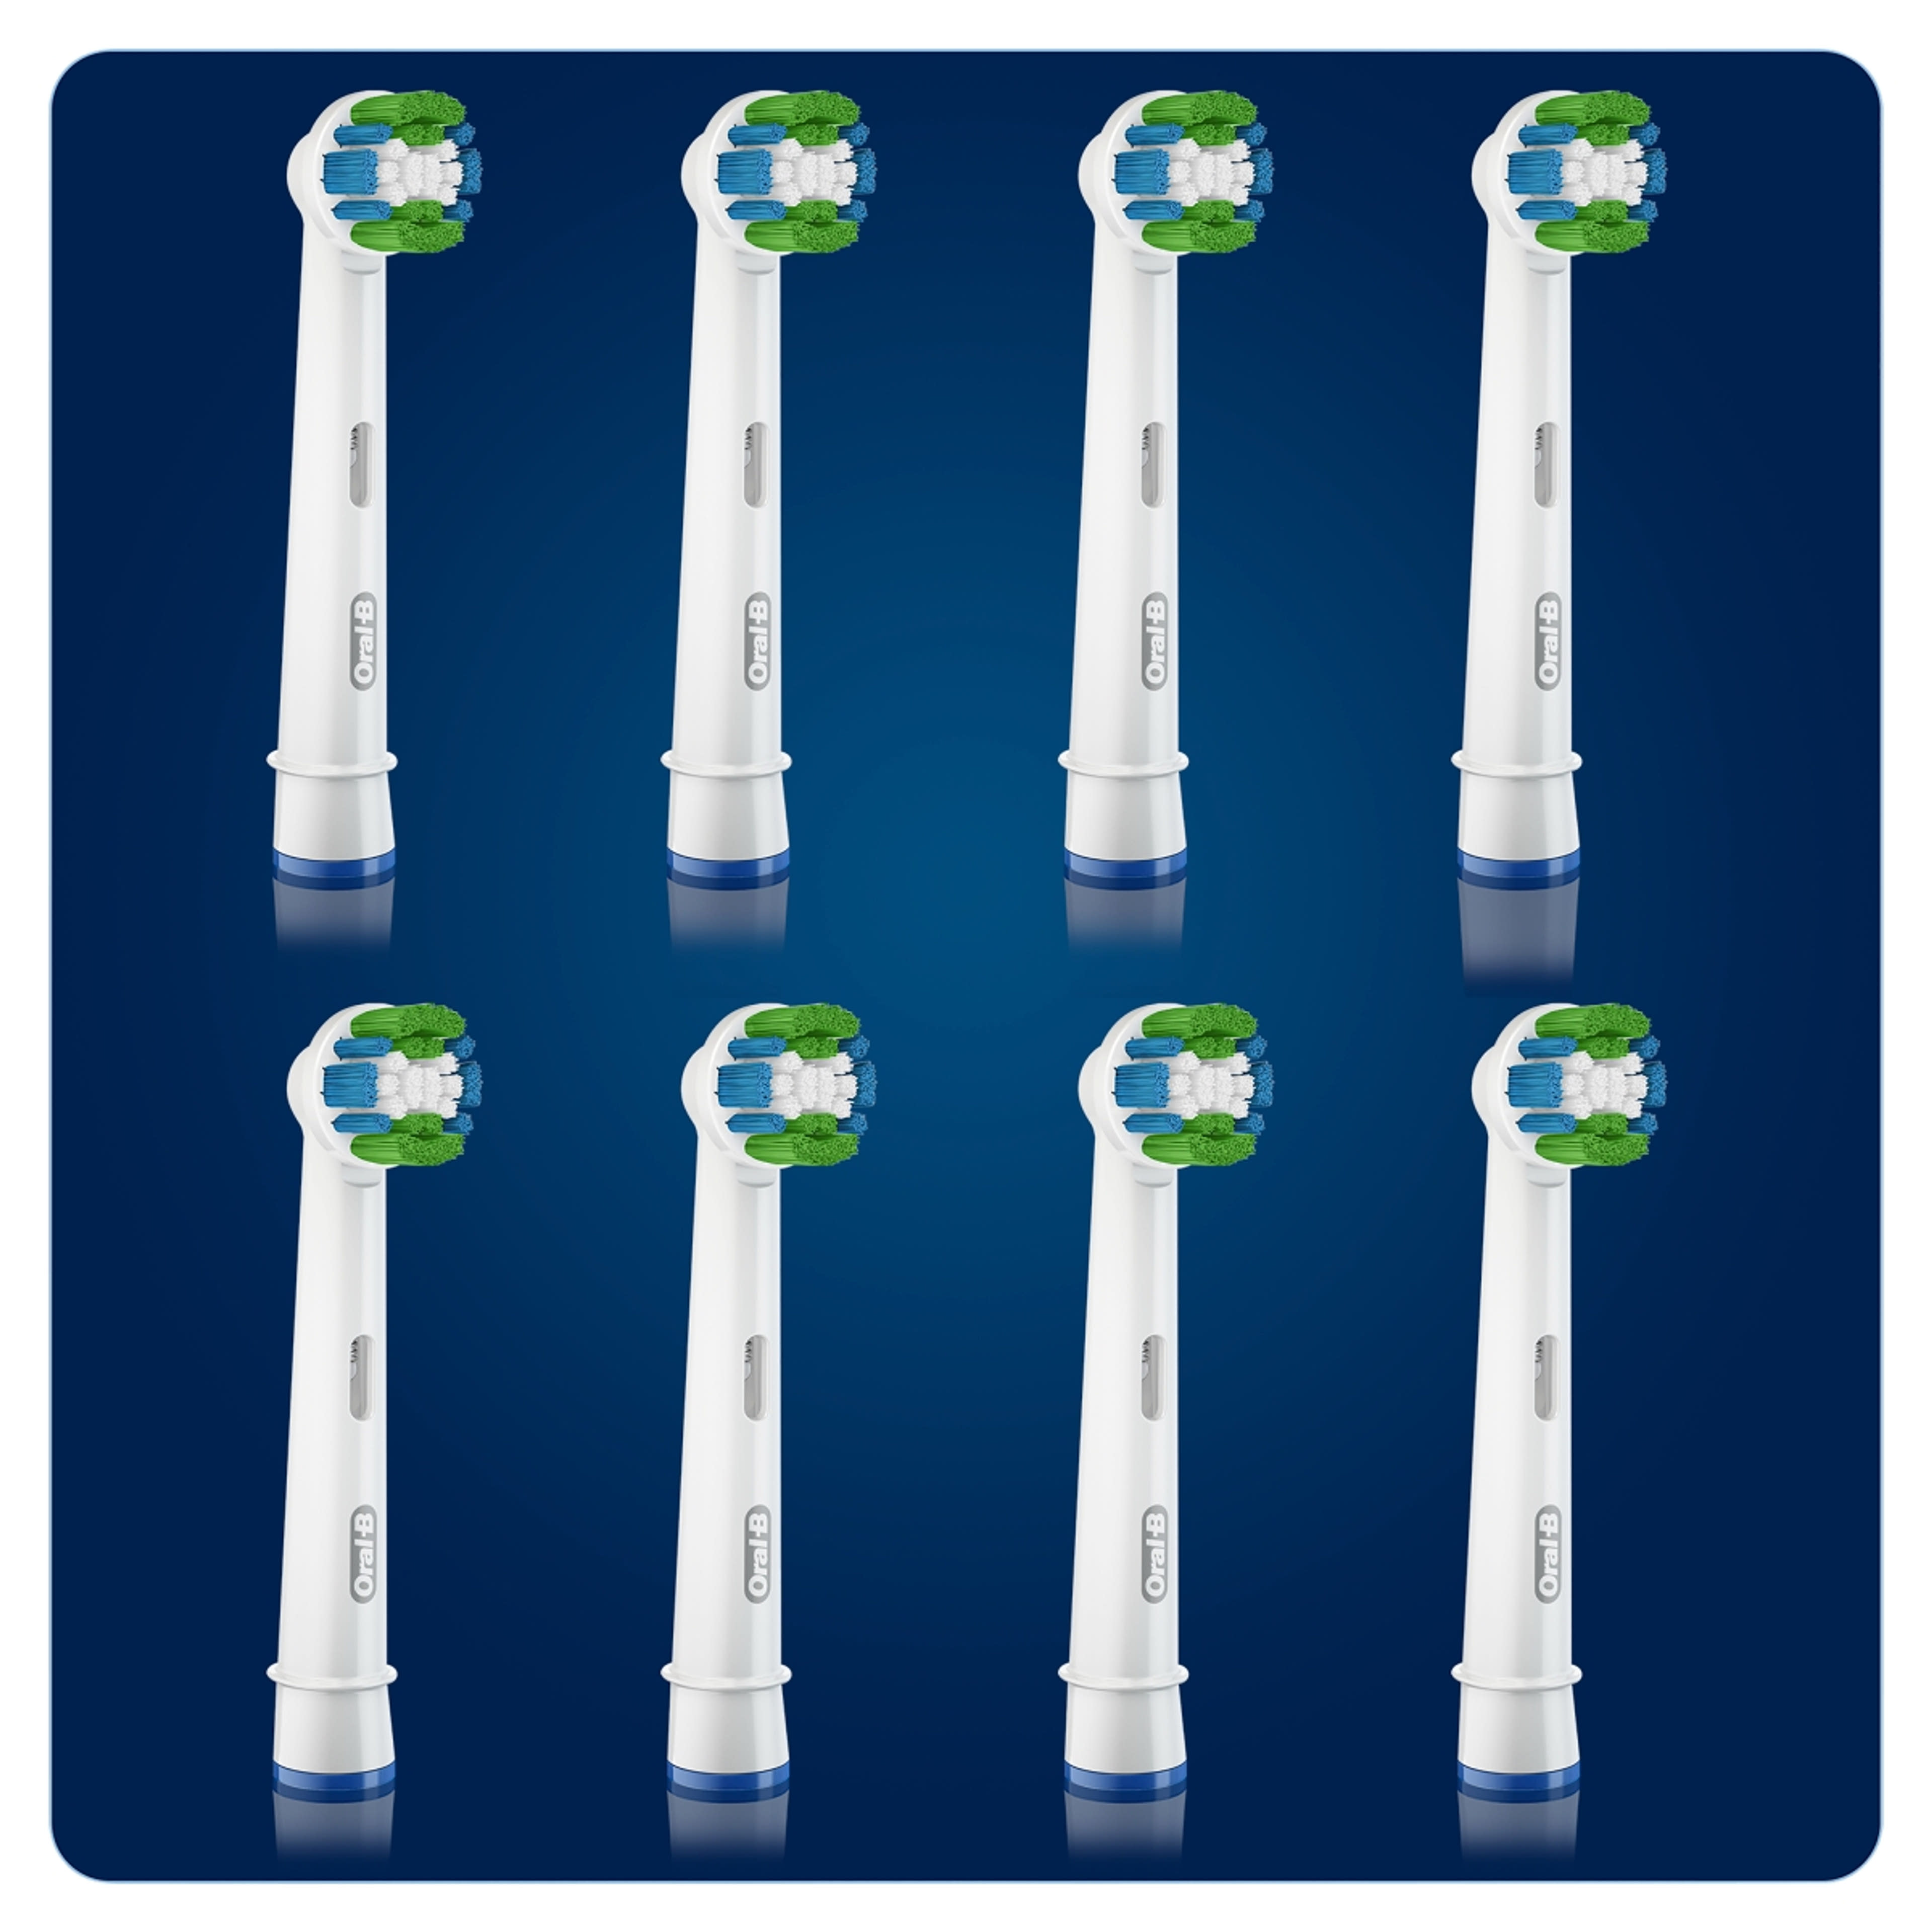 Oral B Precision Clean elektromos fogkefe pótfej - 8 db-7